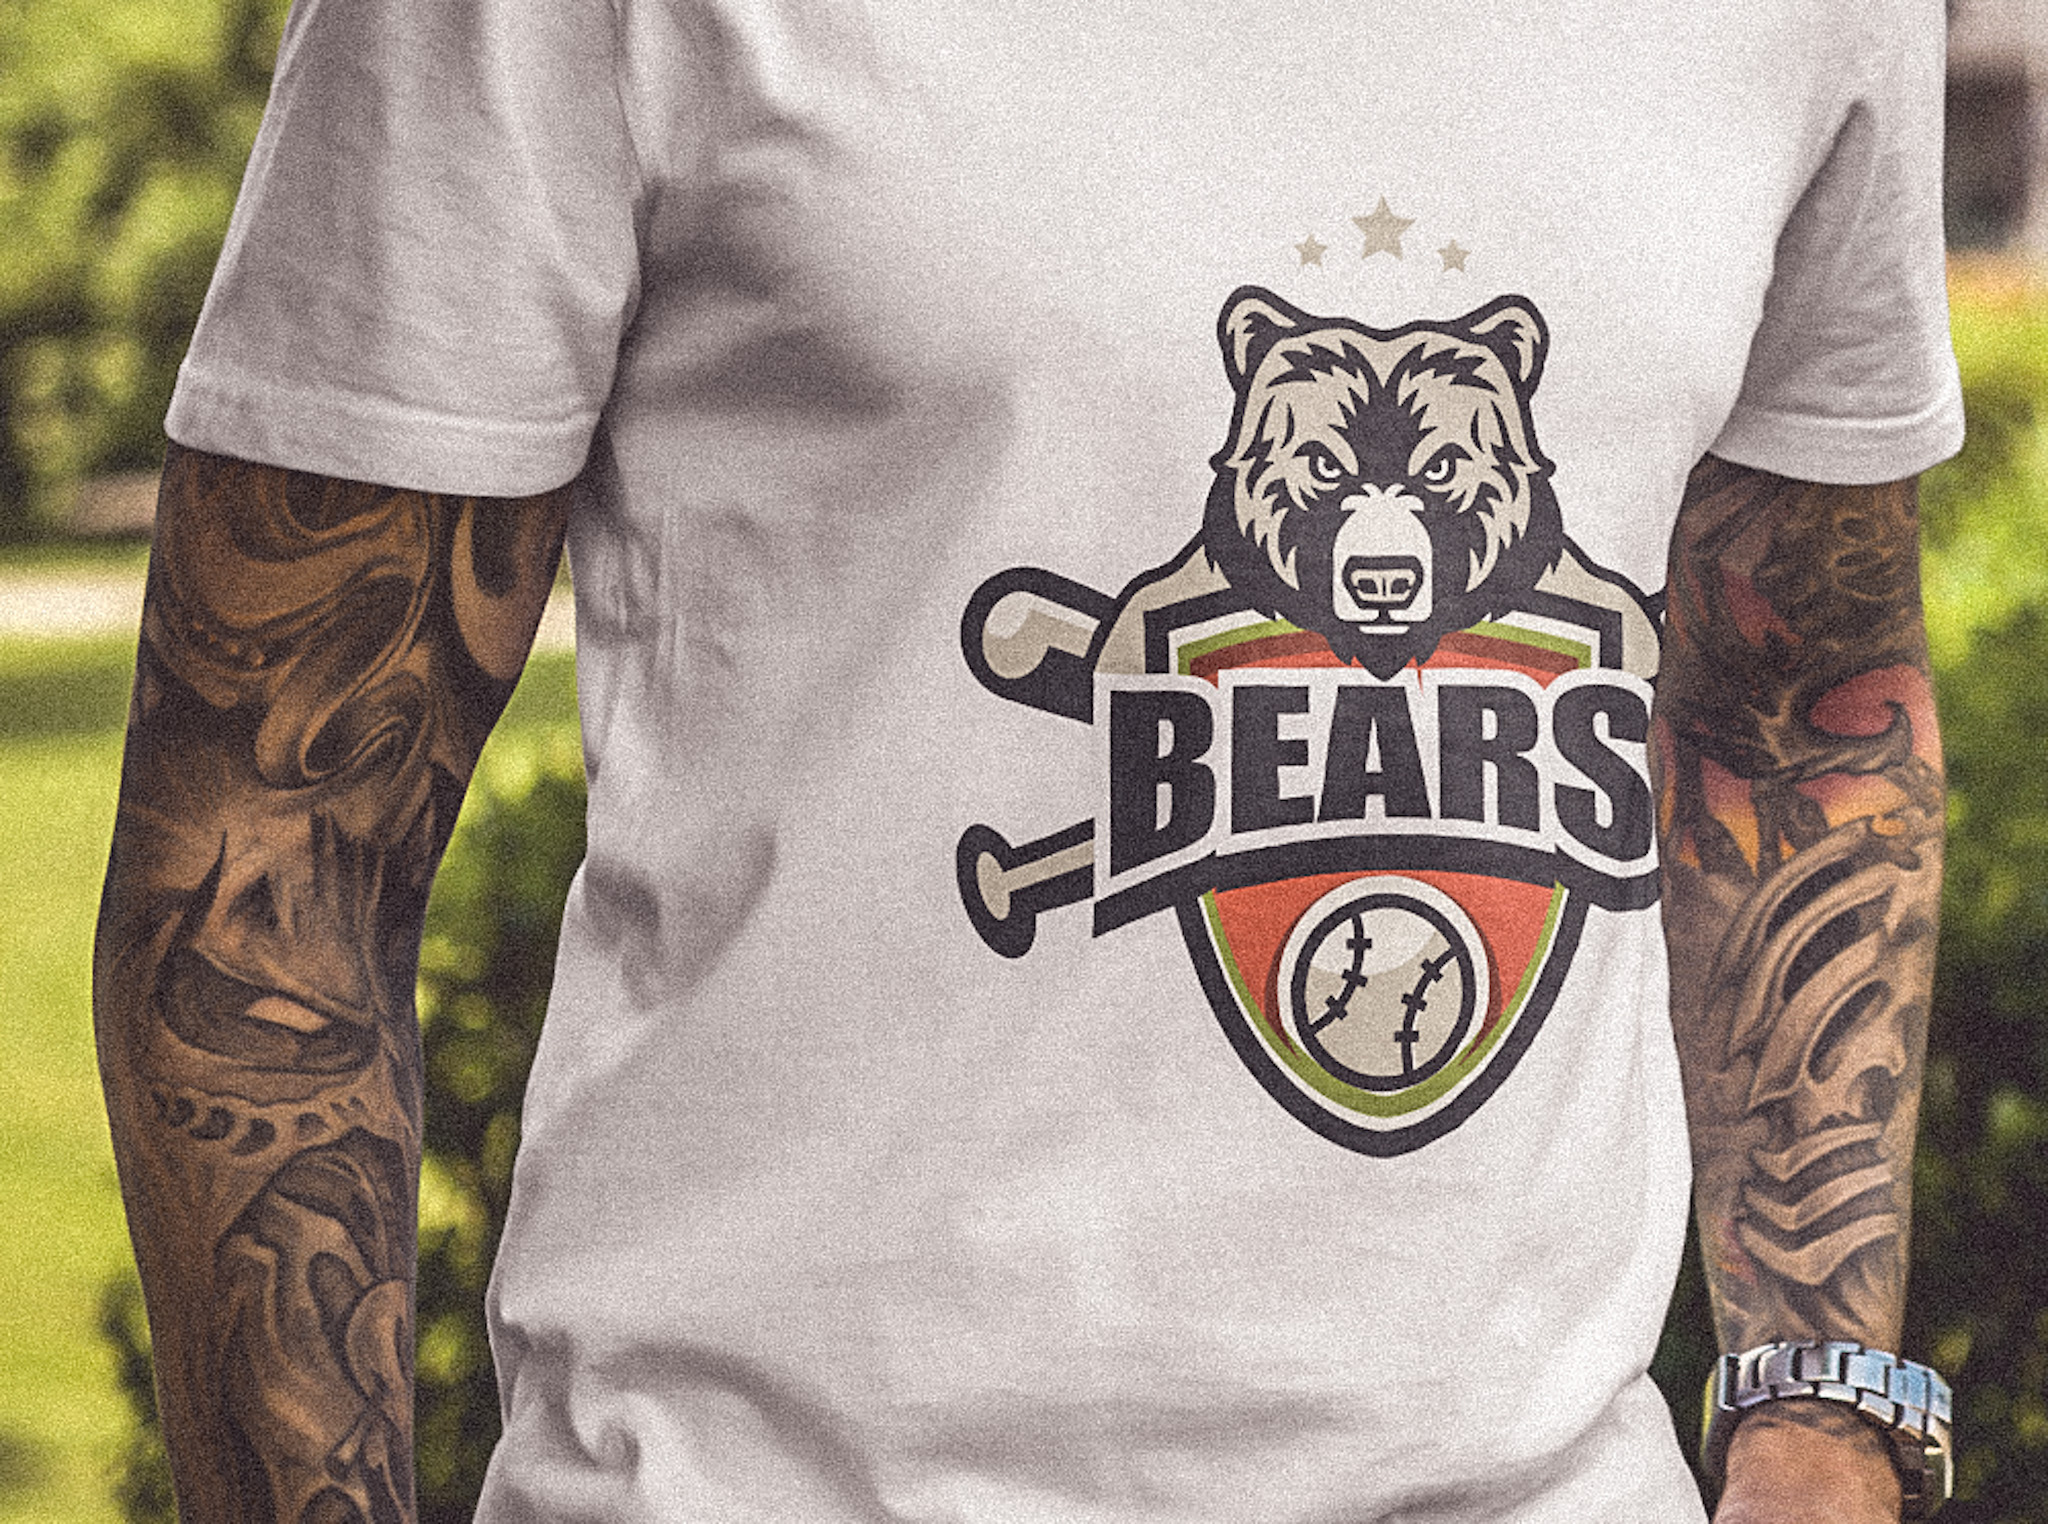 Bears B.S.C. logo design